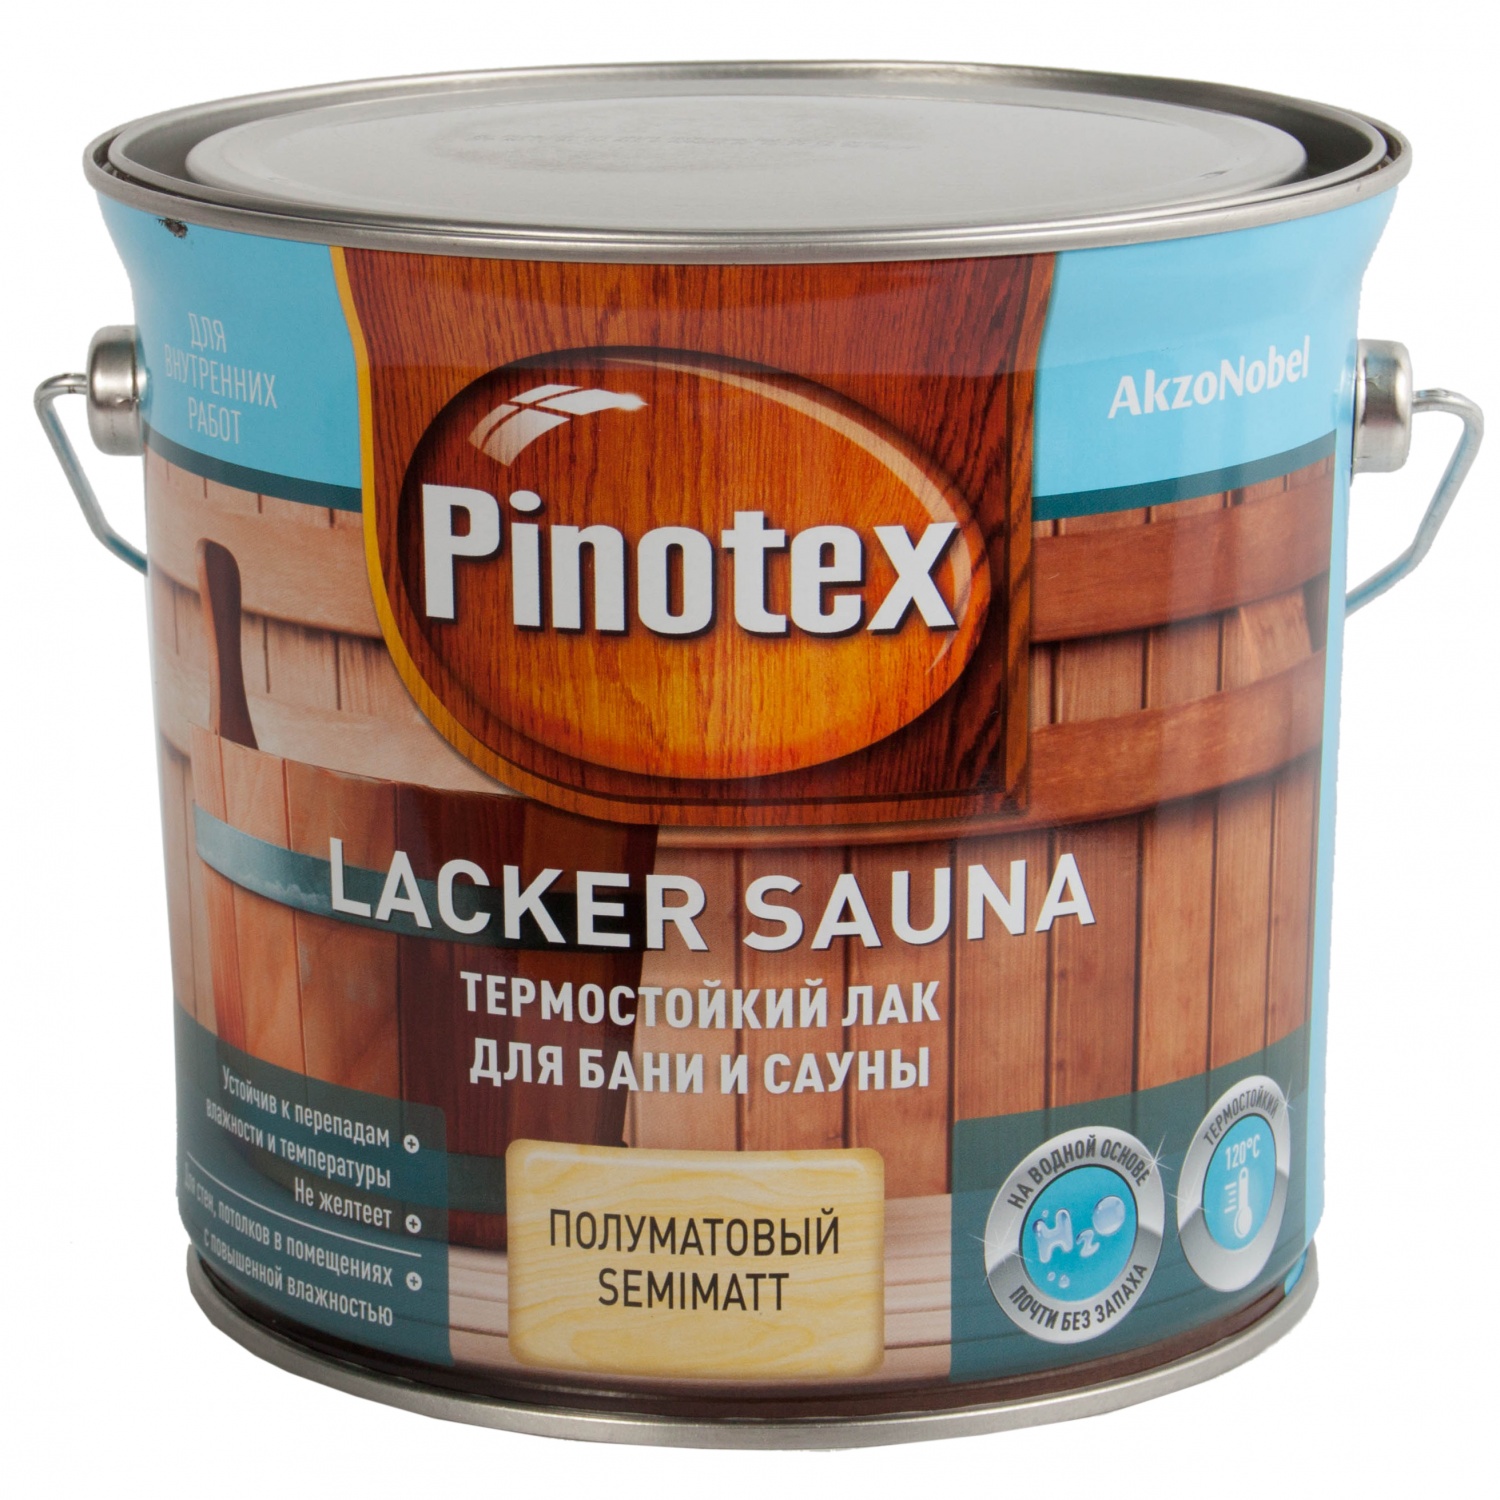      Pinotex Lacker Sauna 20 /.  () 2,7